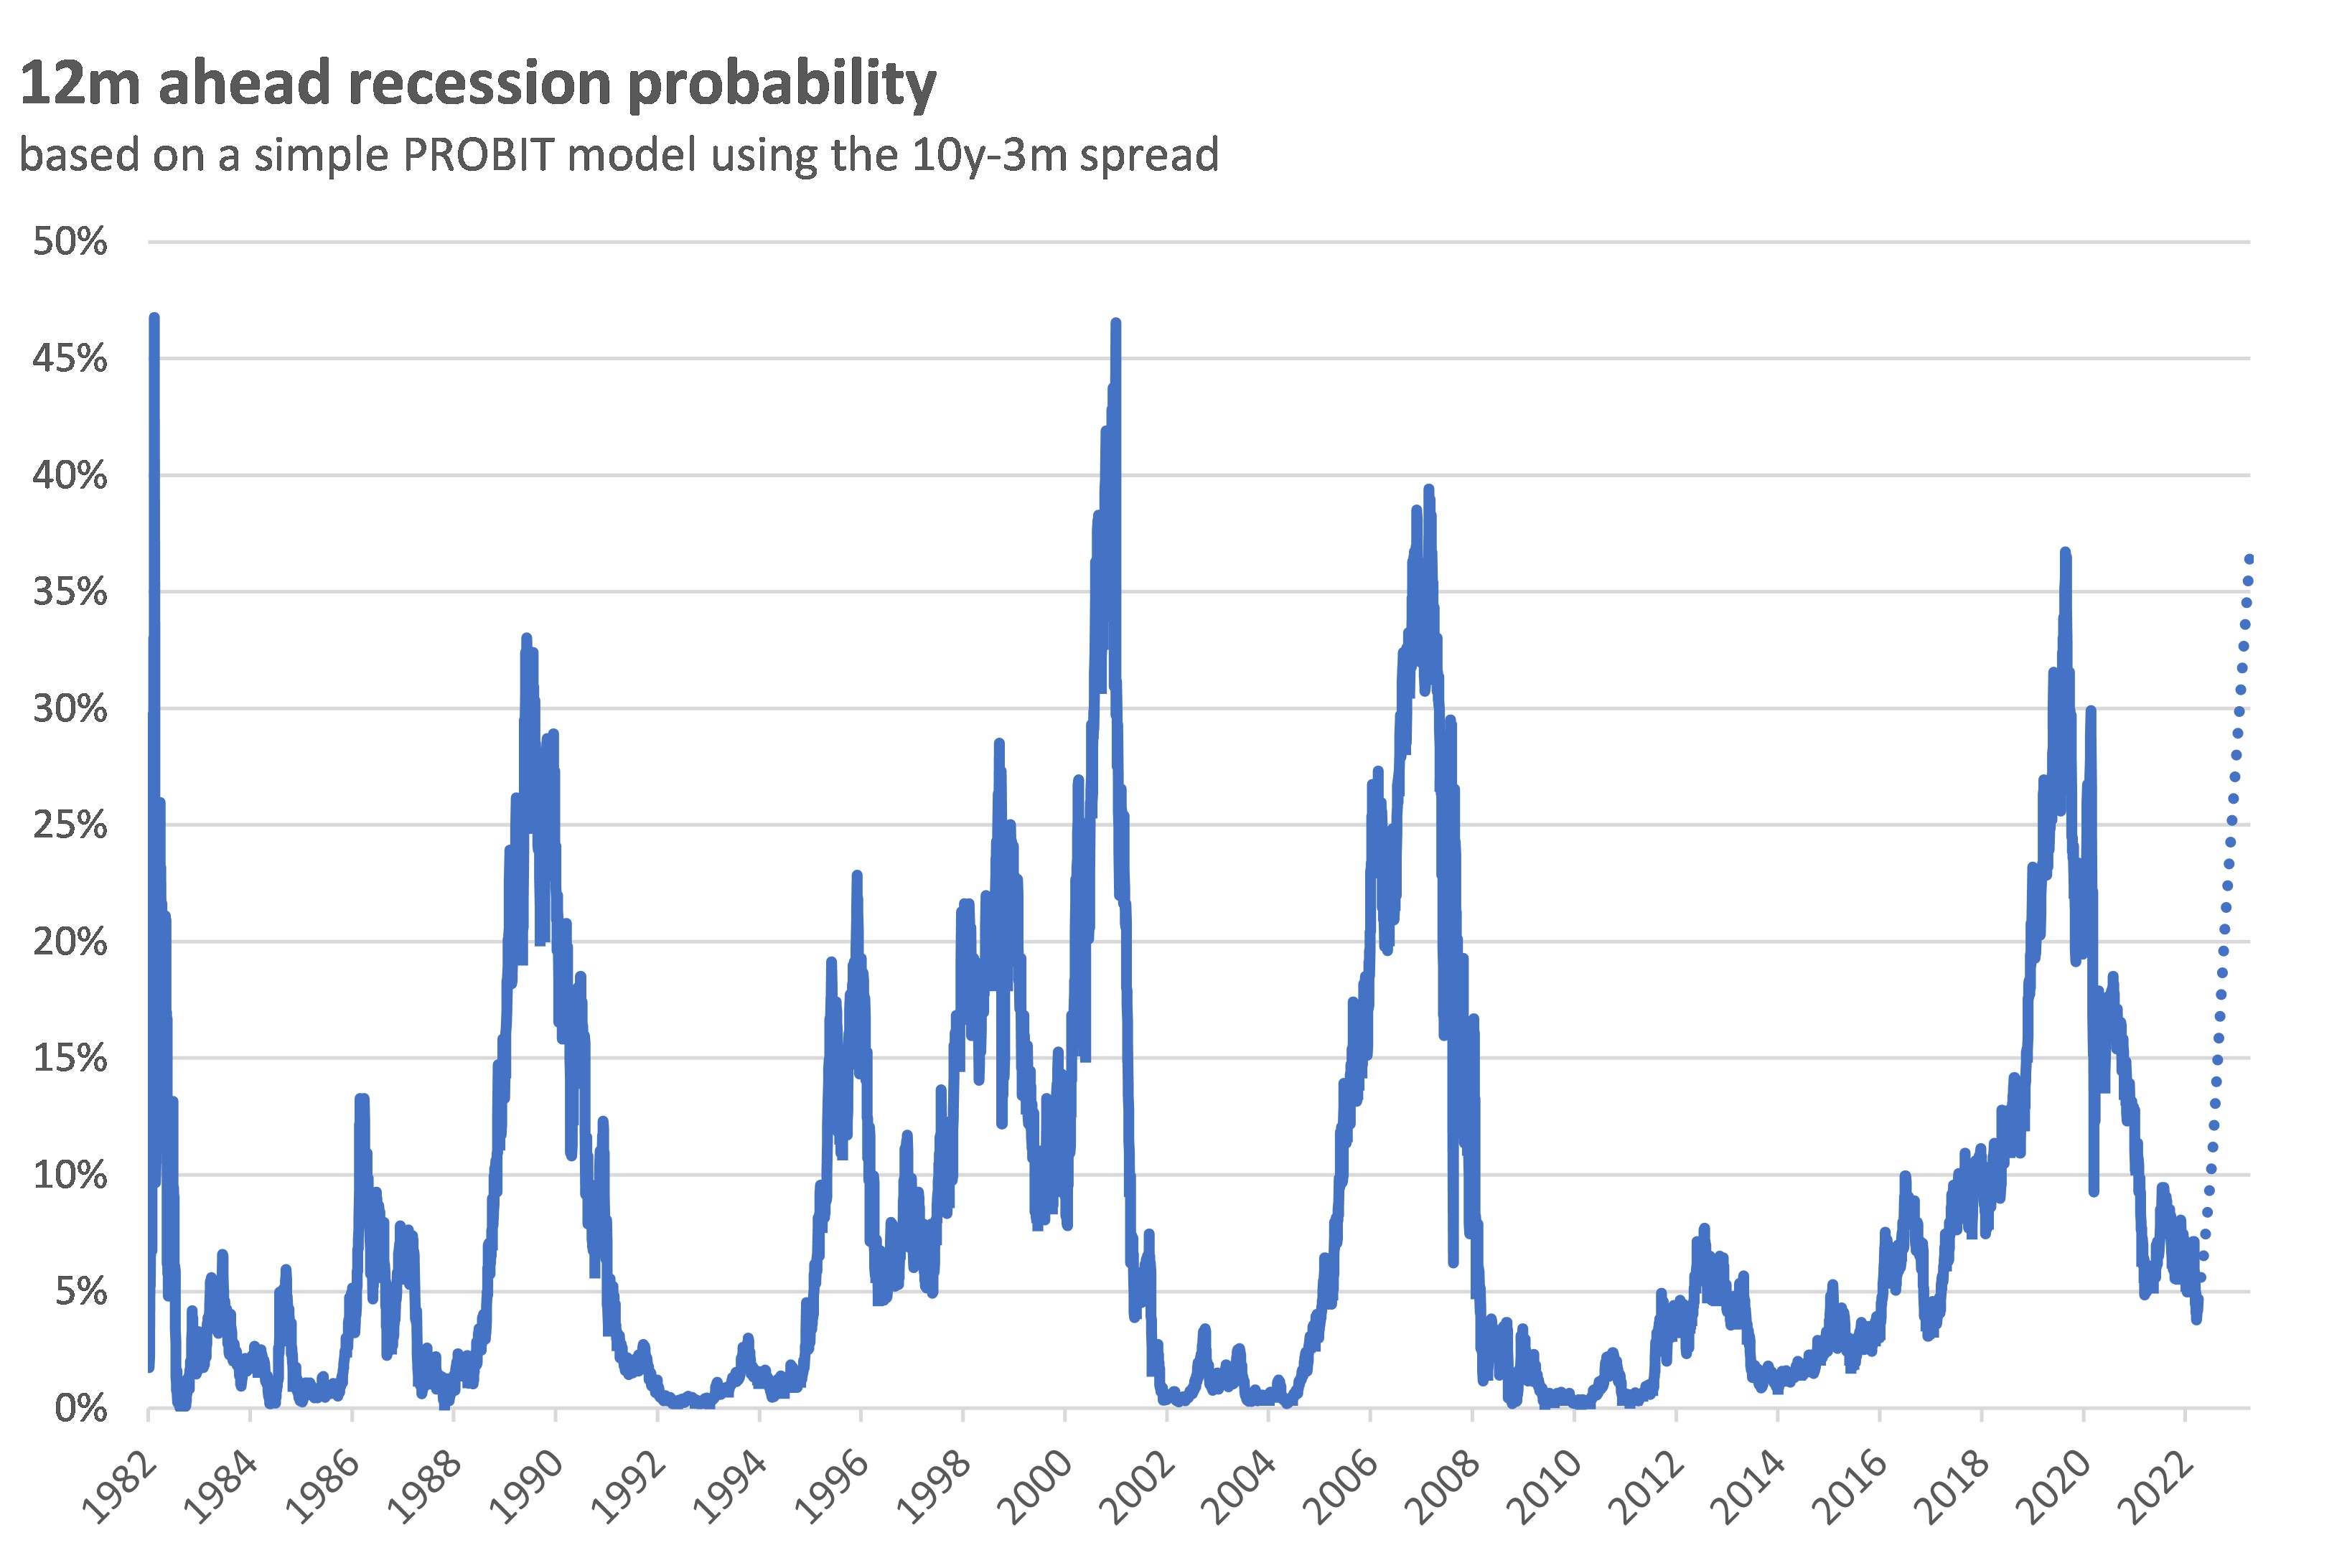 Recession probabilities